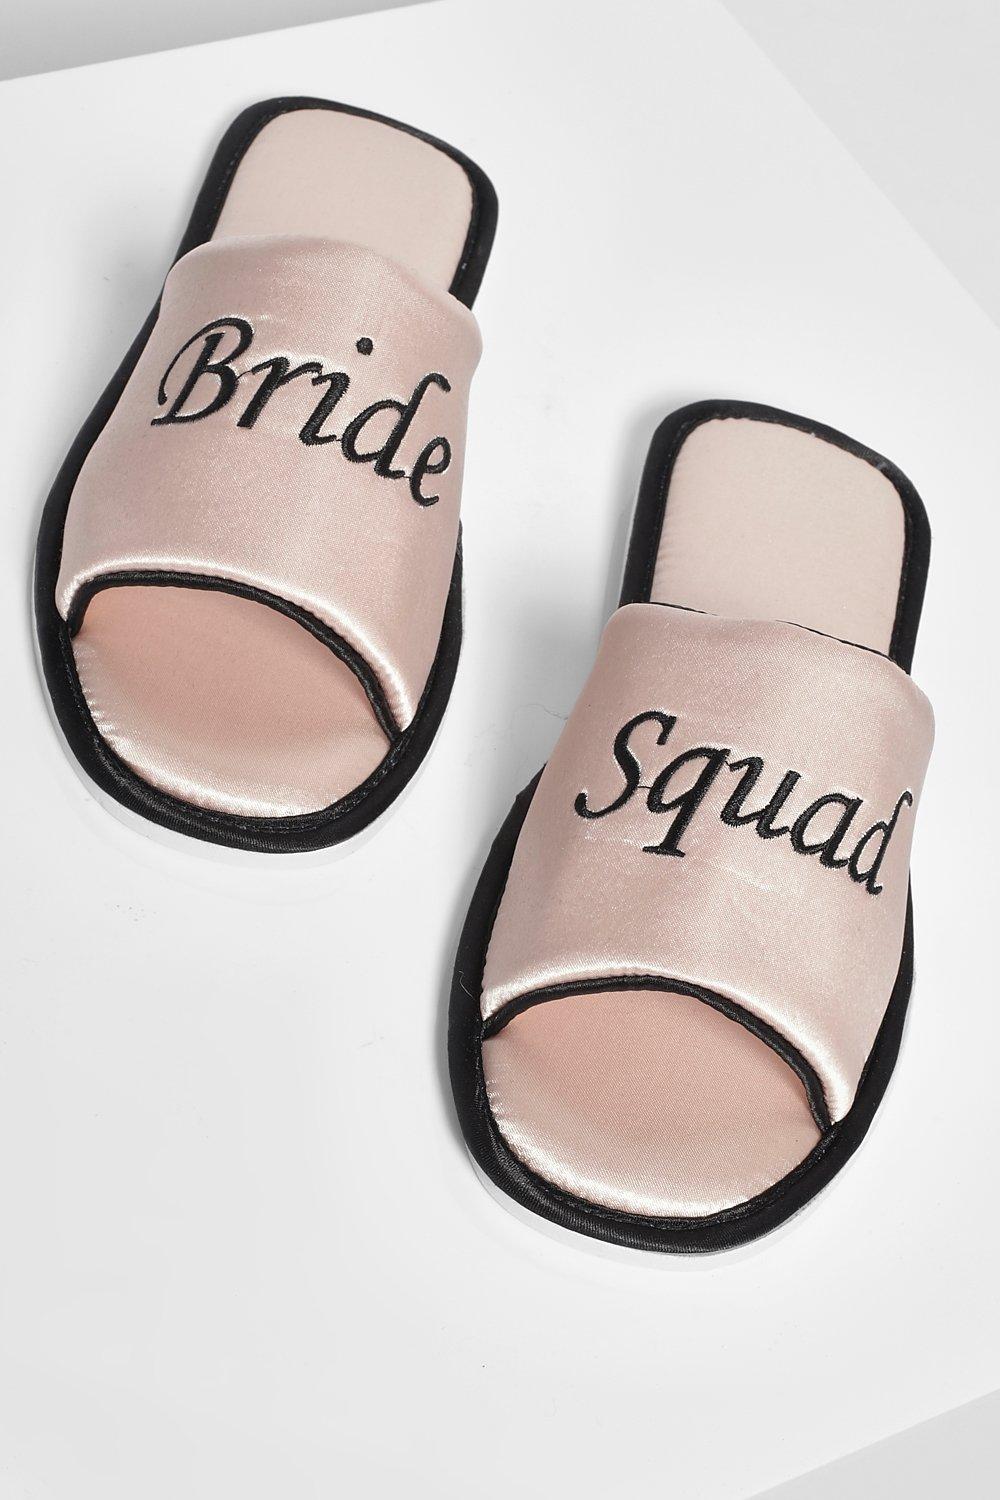 bride slippers ireland